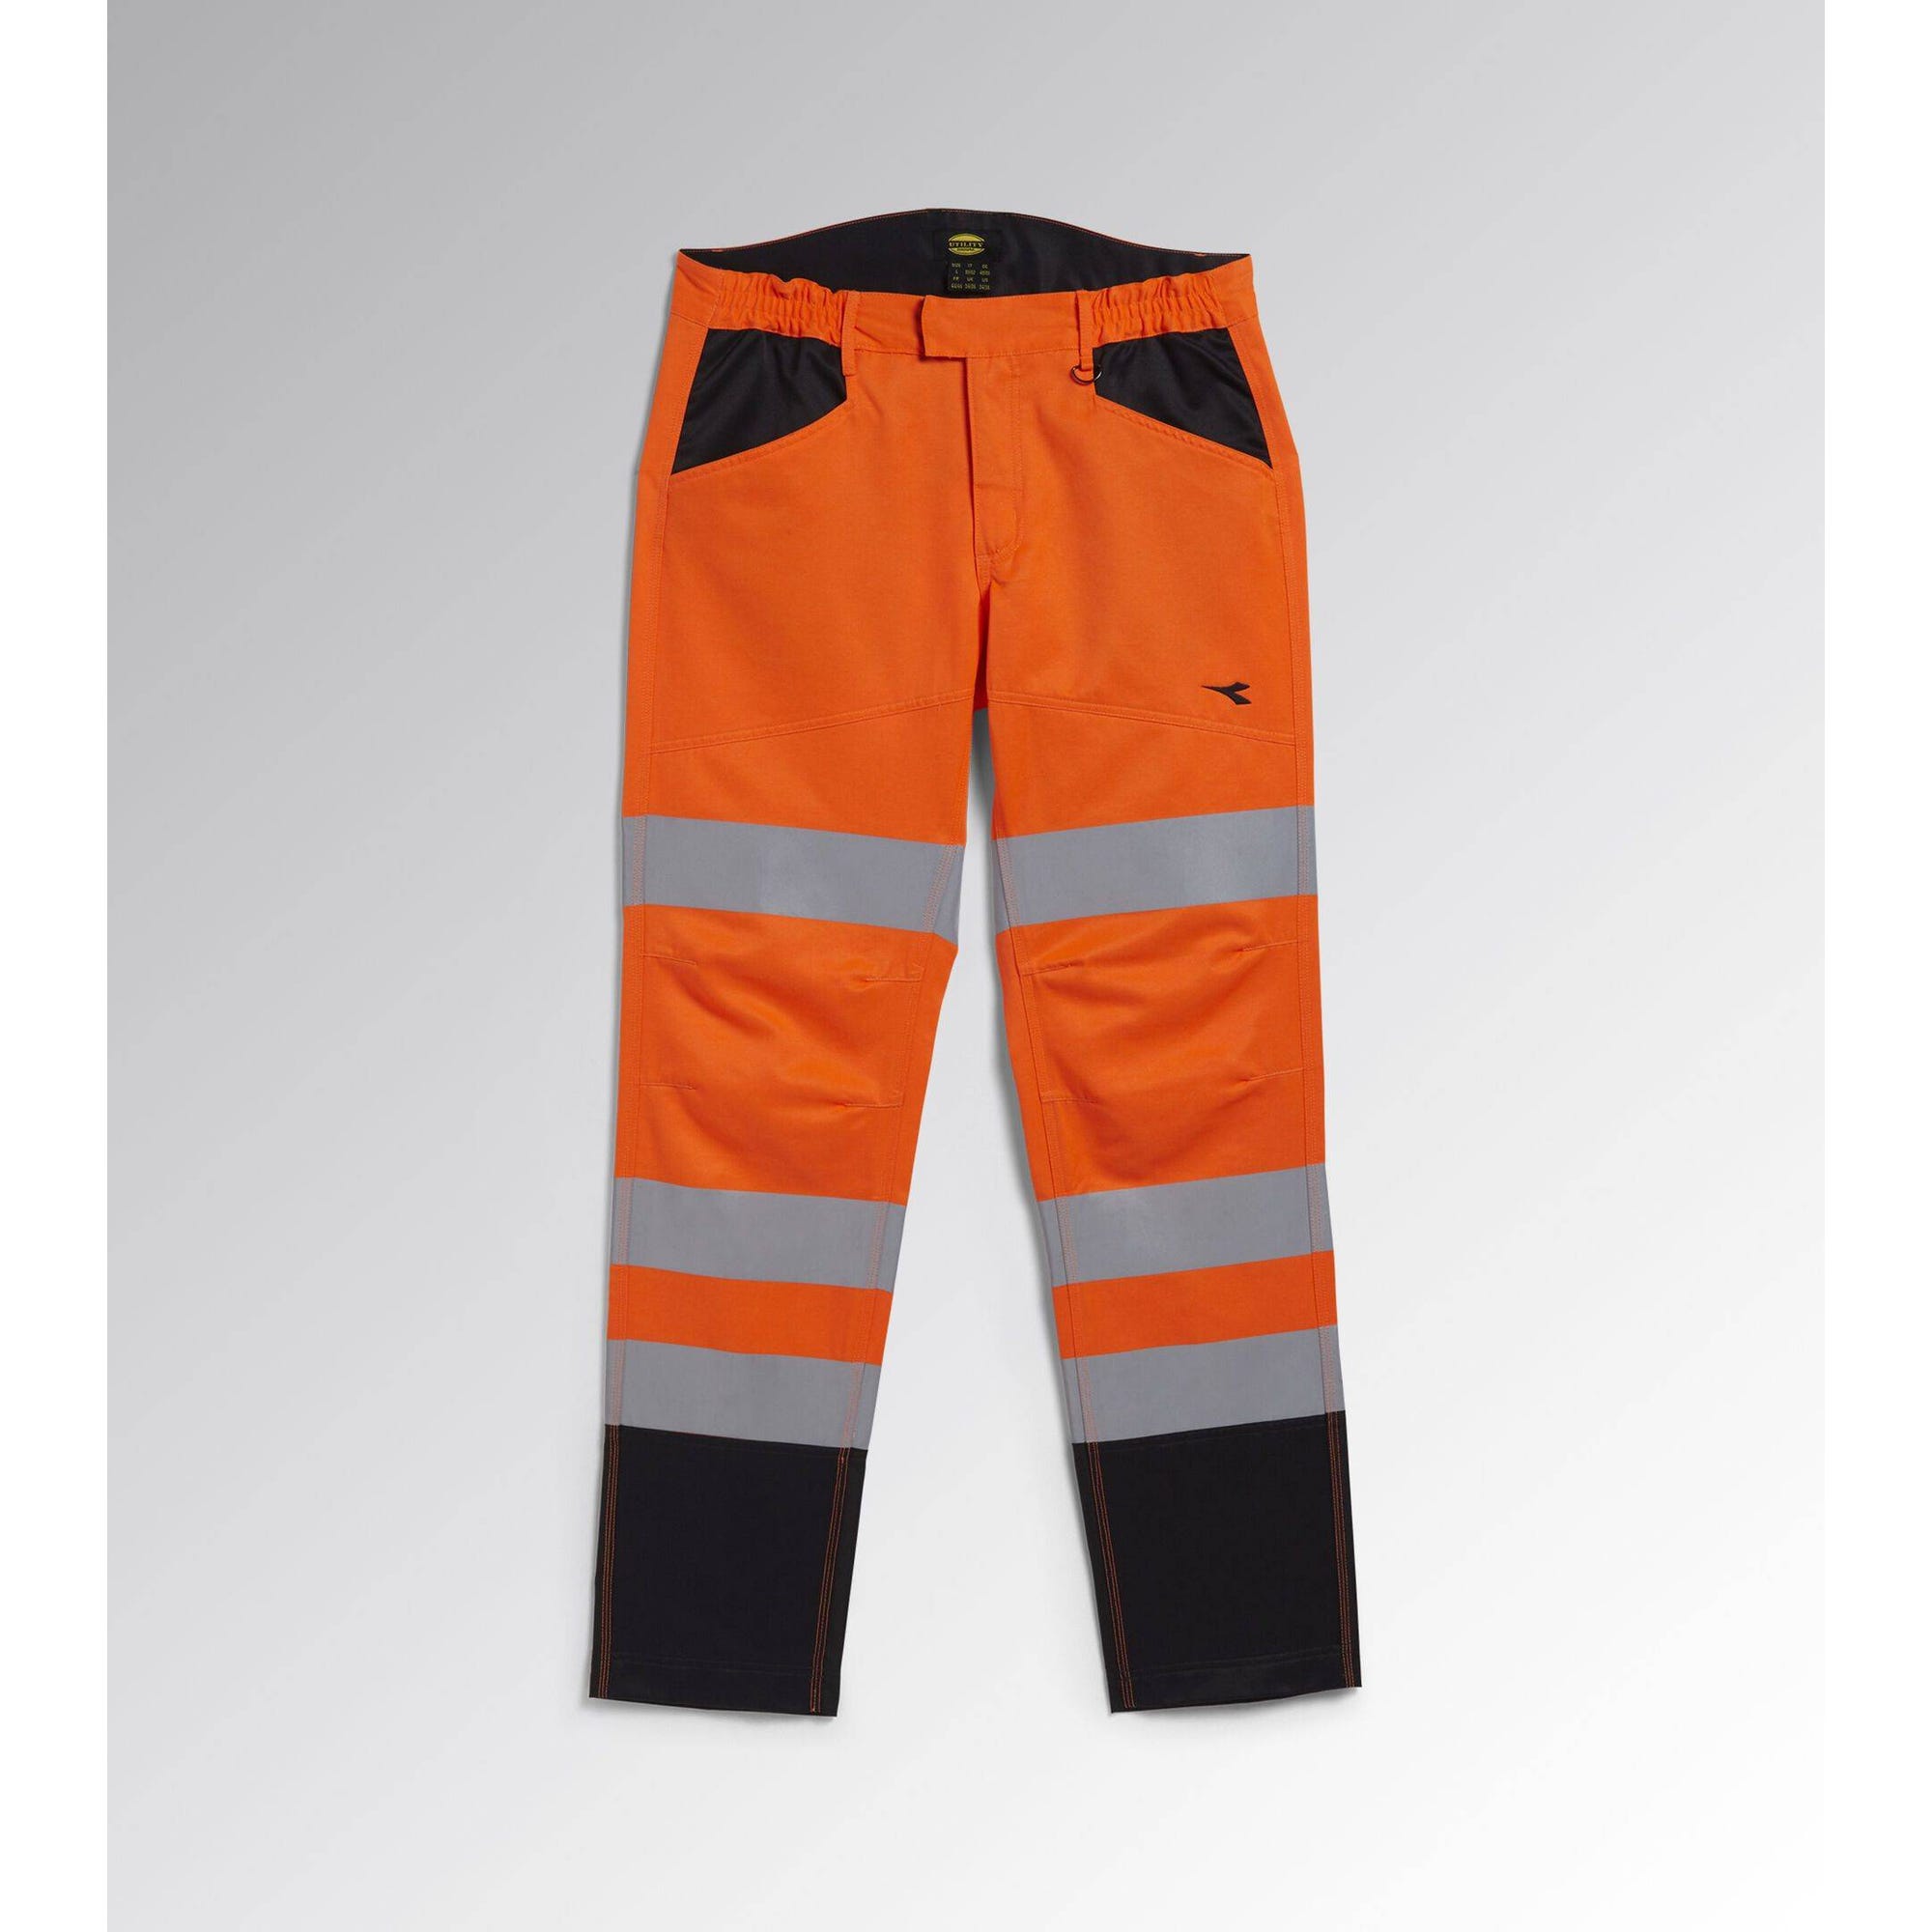 Pantalon de travail haute visibilité Diadora EN 20471:2013 2 Orange Fluo XL 7